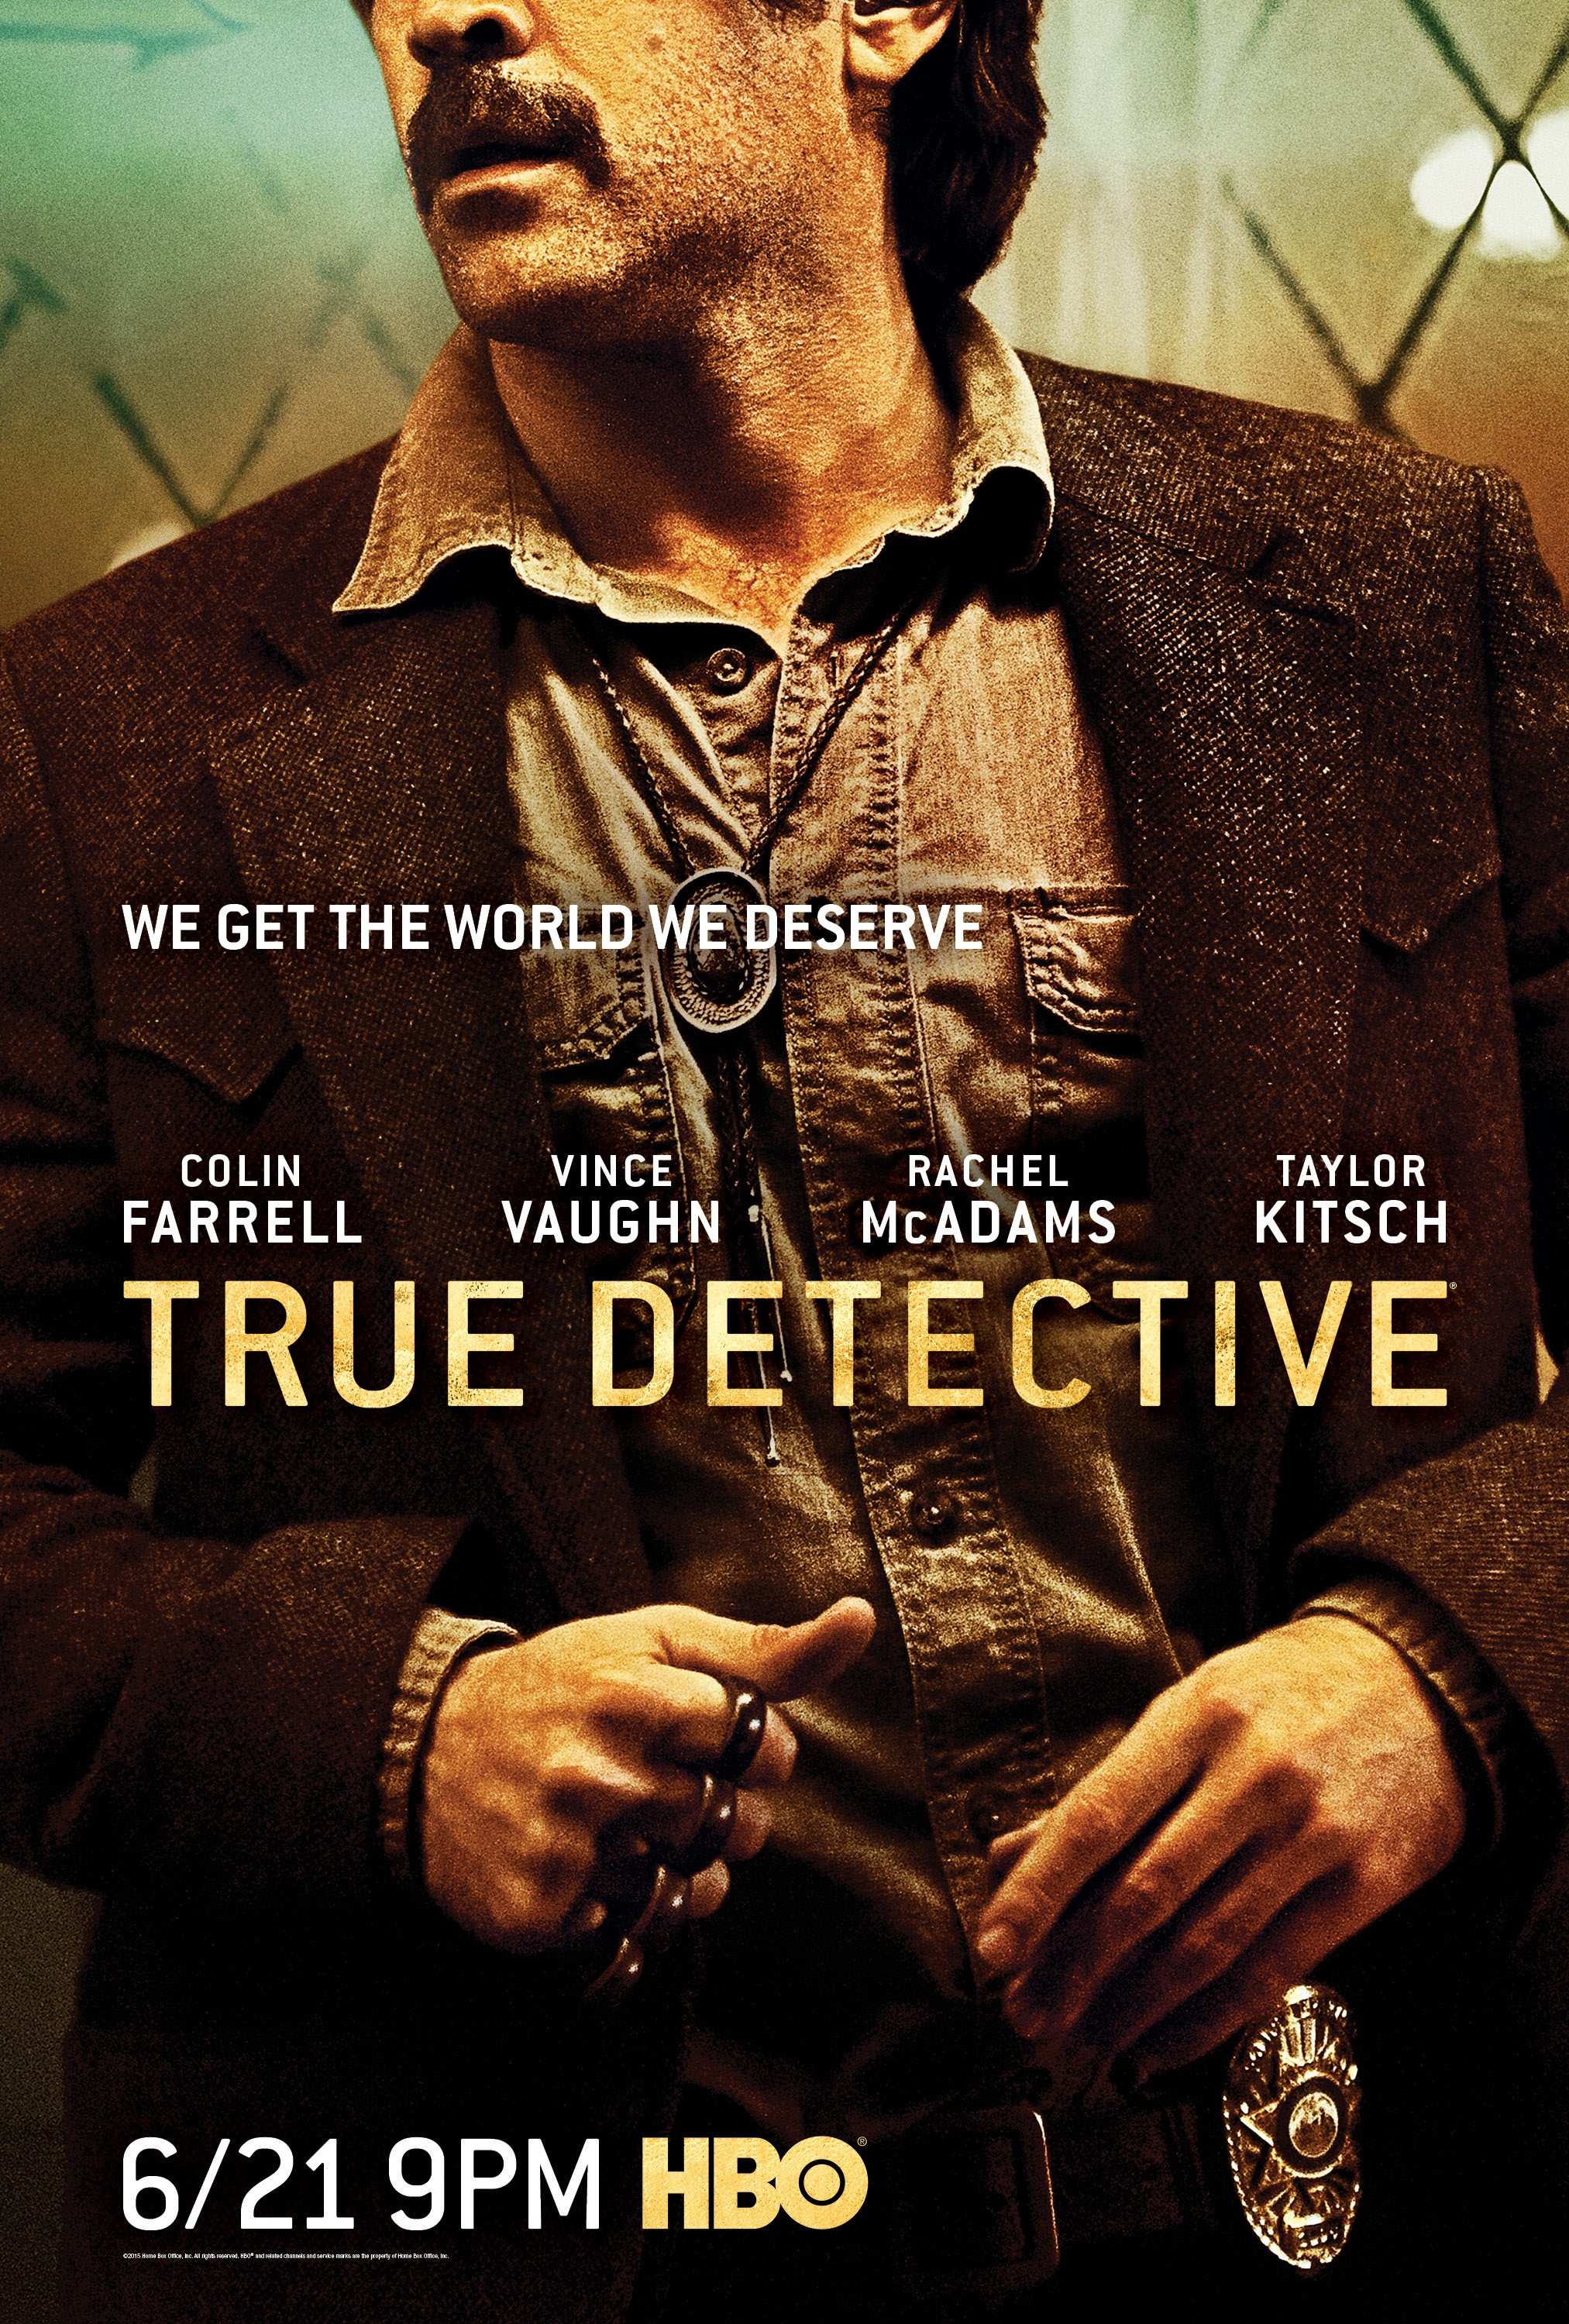 true detective season 1 summary